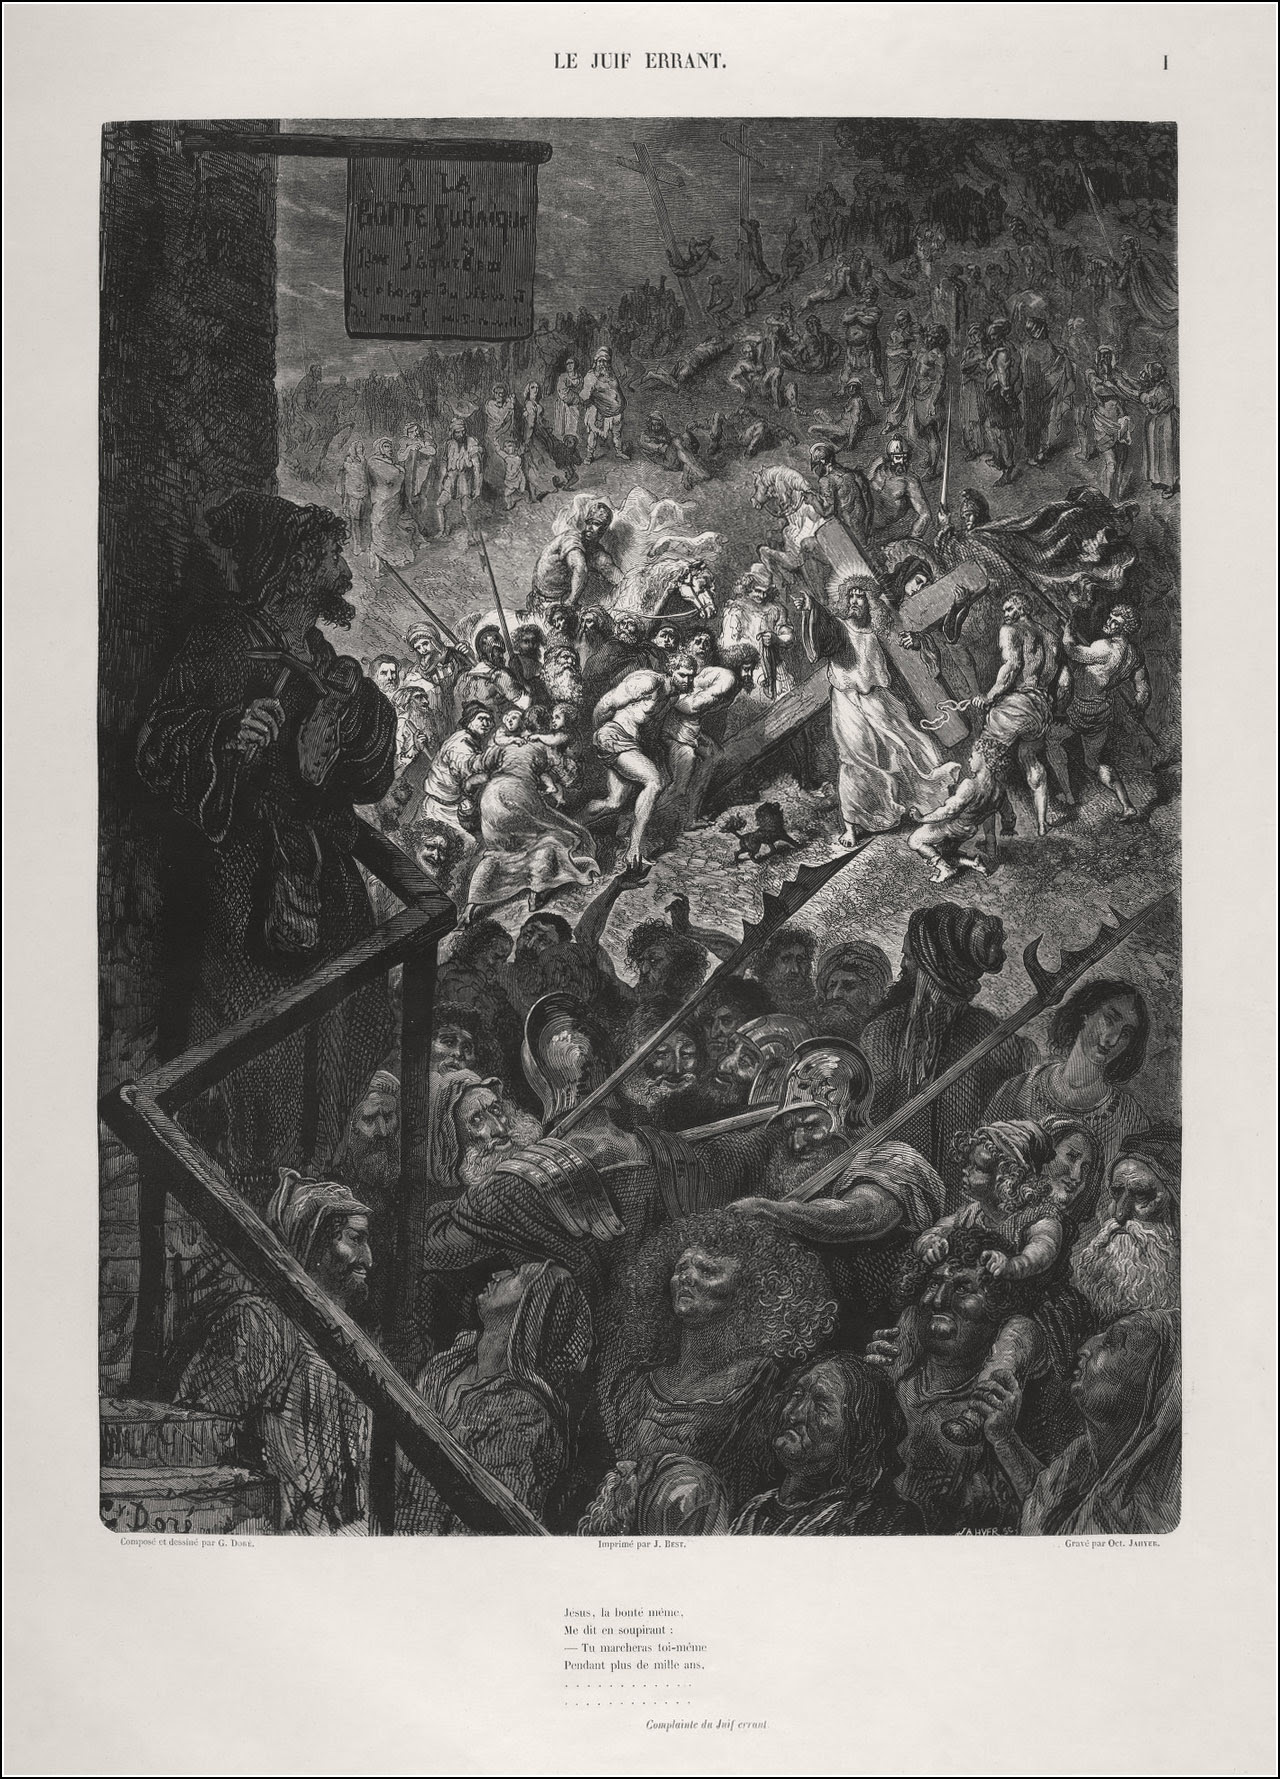 Gustave Doré, La légende du Juif errant